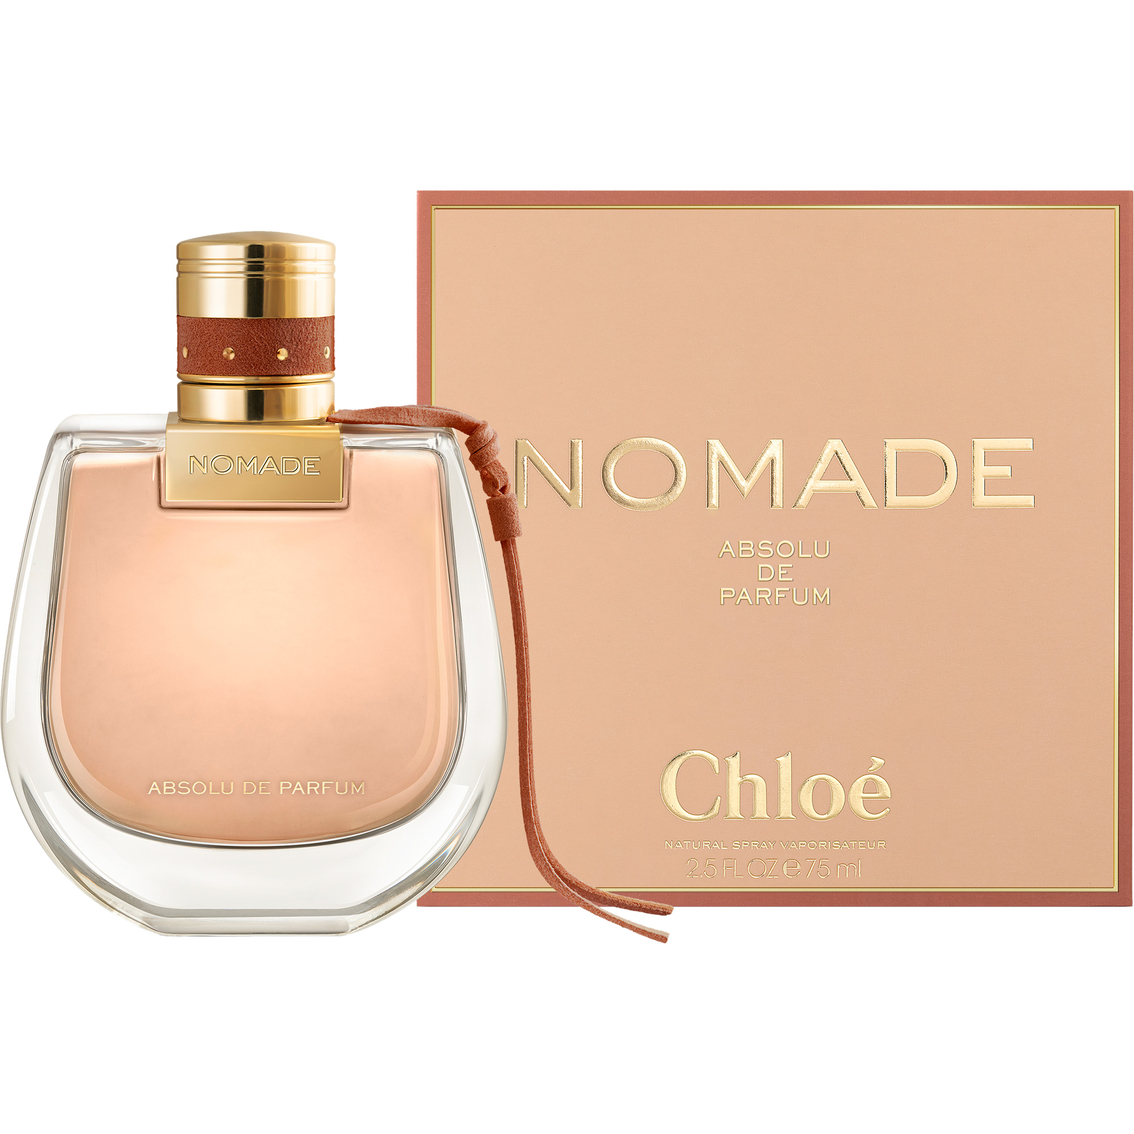 Chloe Nomade Absolu de Parfum, 1.7 oz. - Image 2 of 3